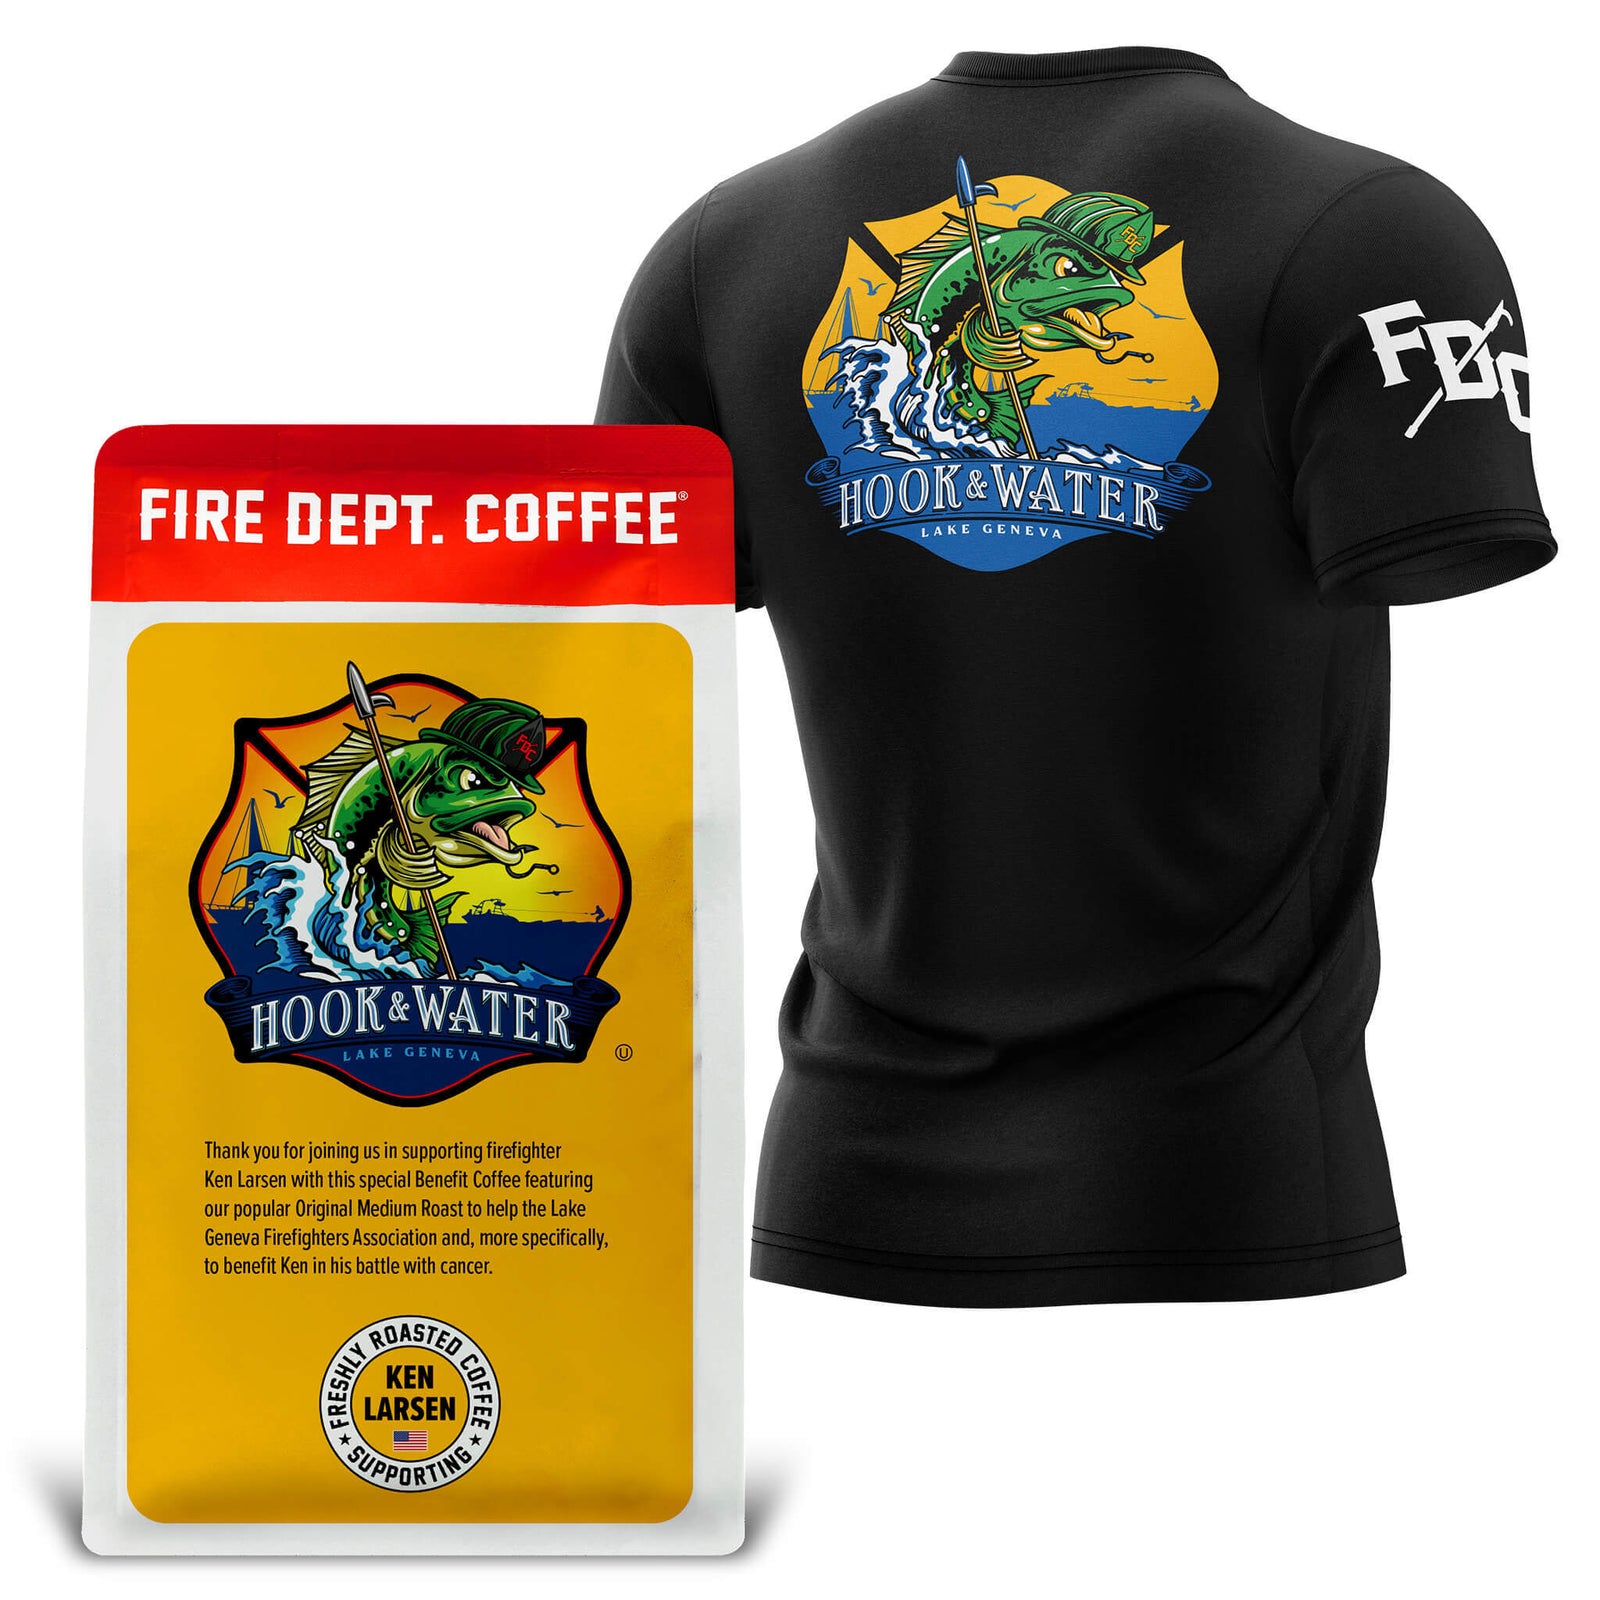 Benefit shirt and coffee bundle supporting Ken Larsen of Lake Geneva Wisconsin Fire Department